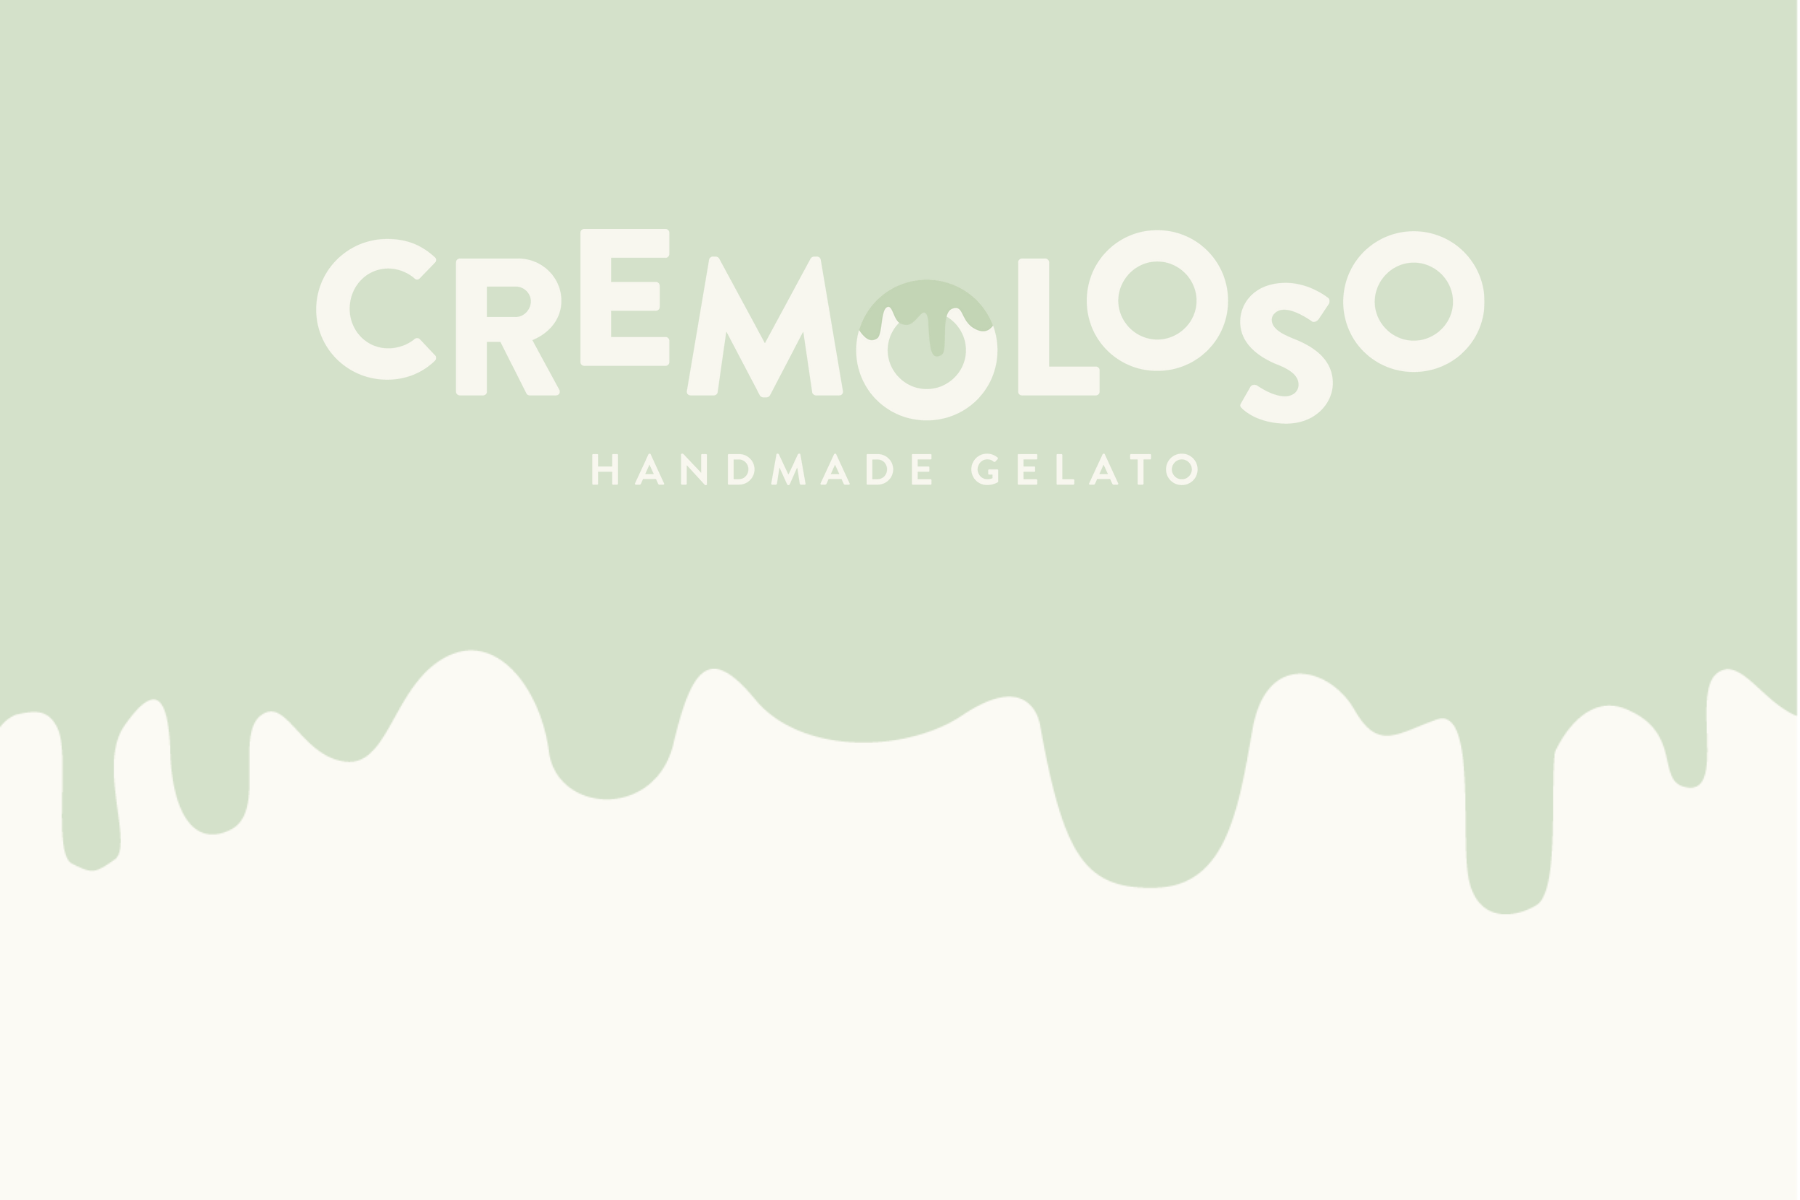 Wholesale Cremoloso Gelato wholesale ice cream gelato best near me